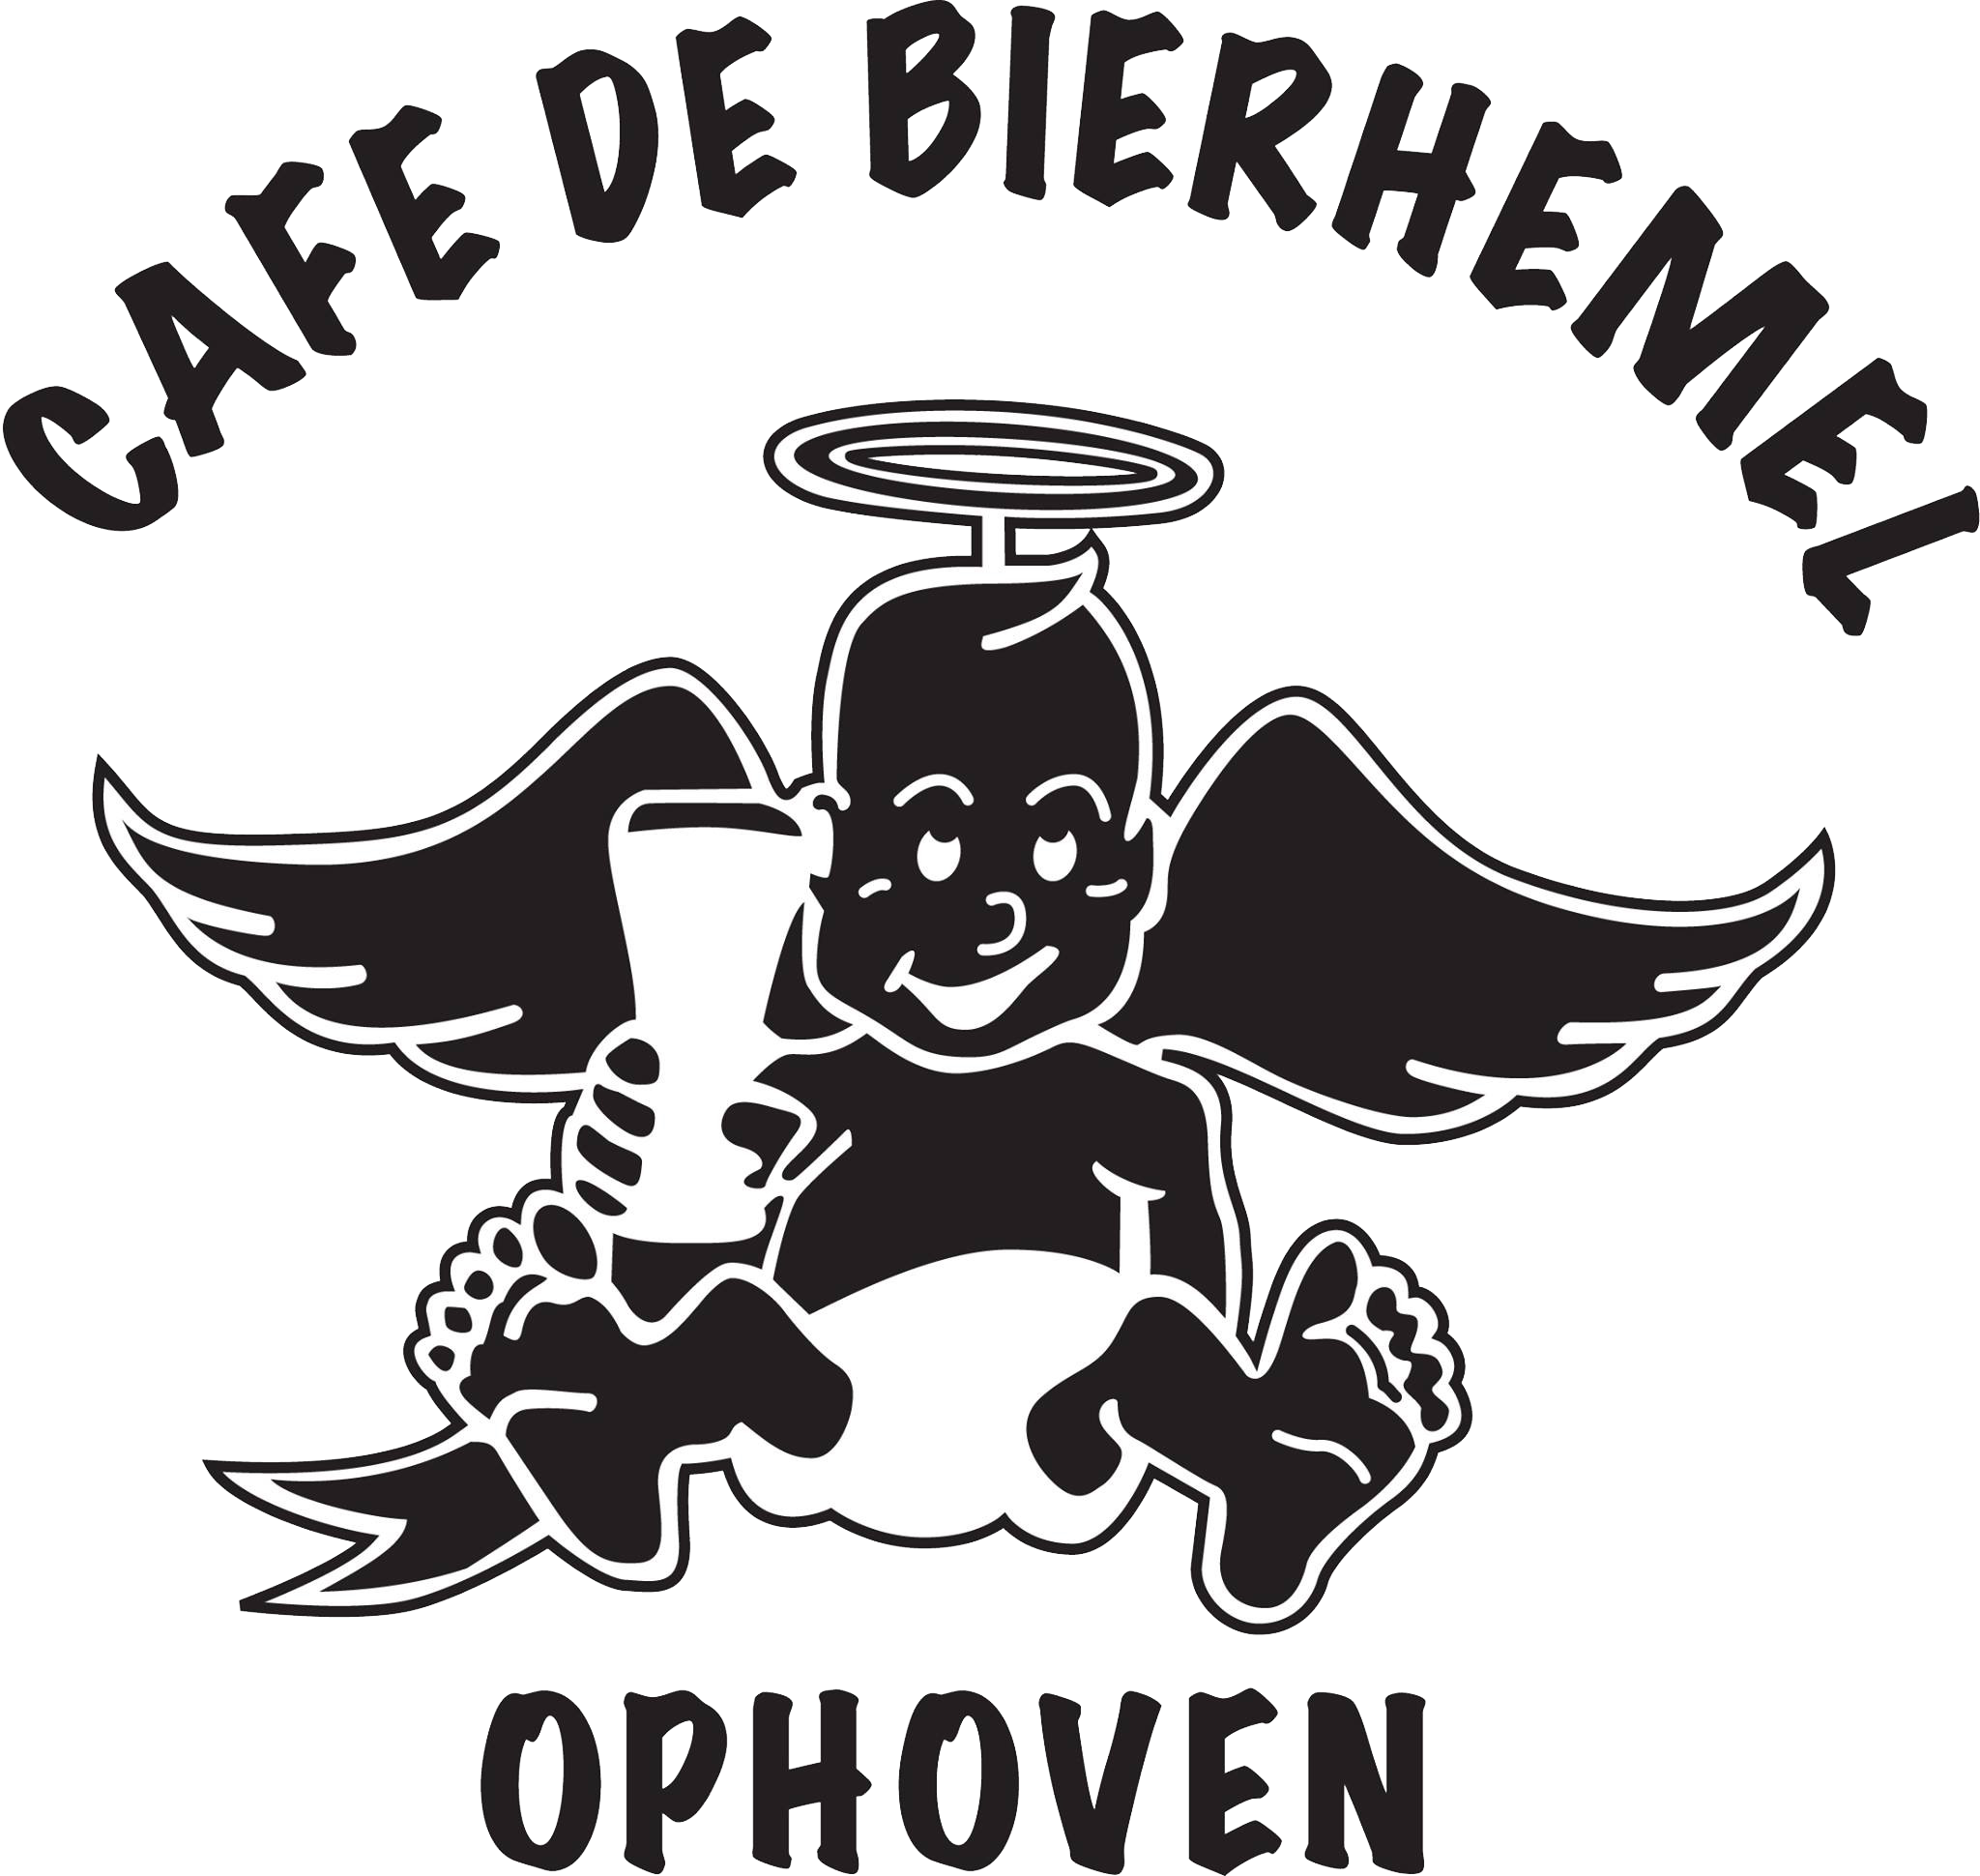 Cafe De Bierhemel nav logo